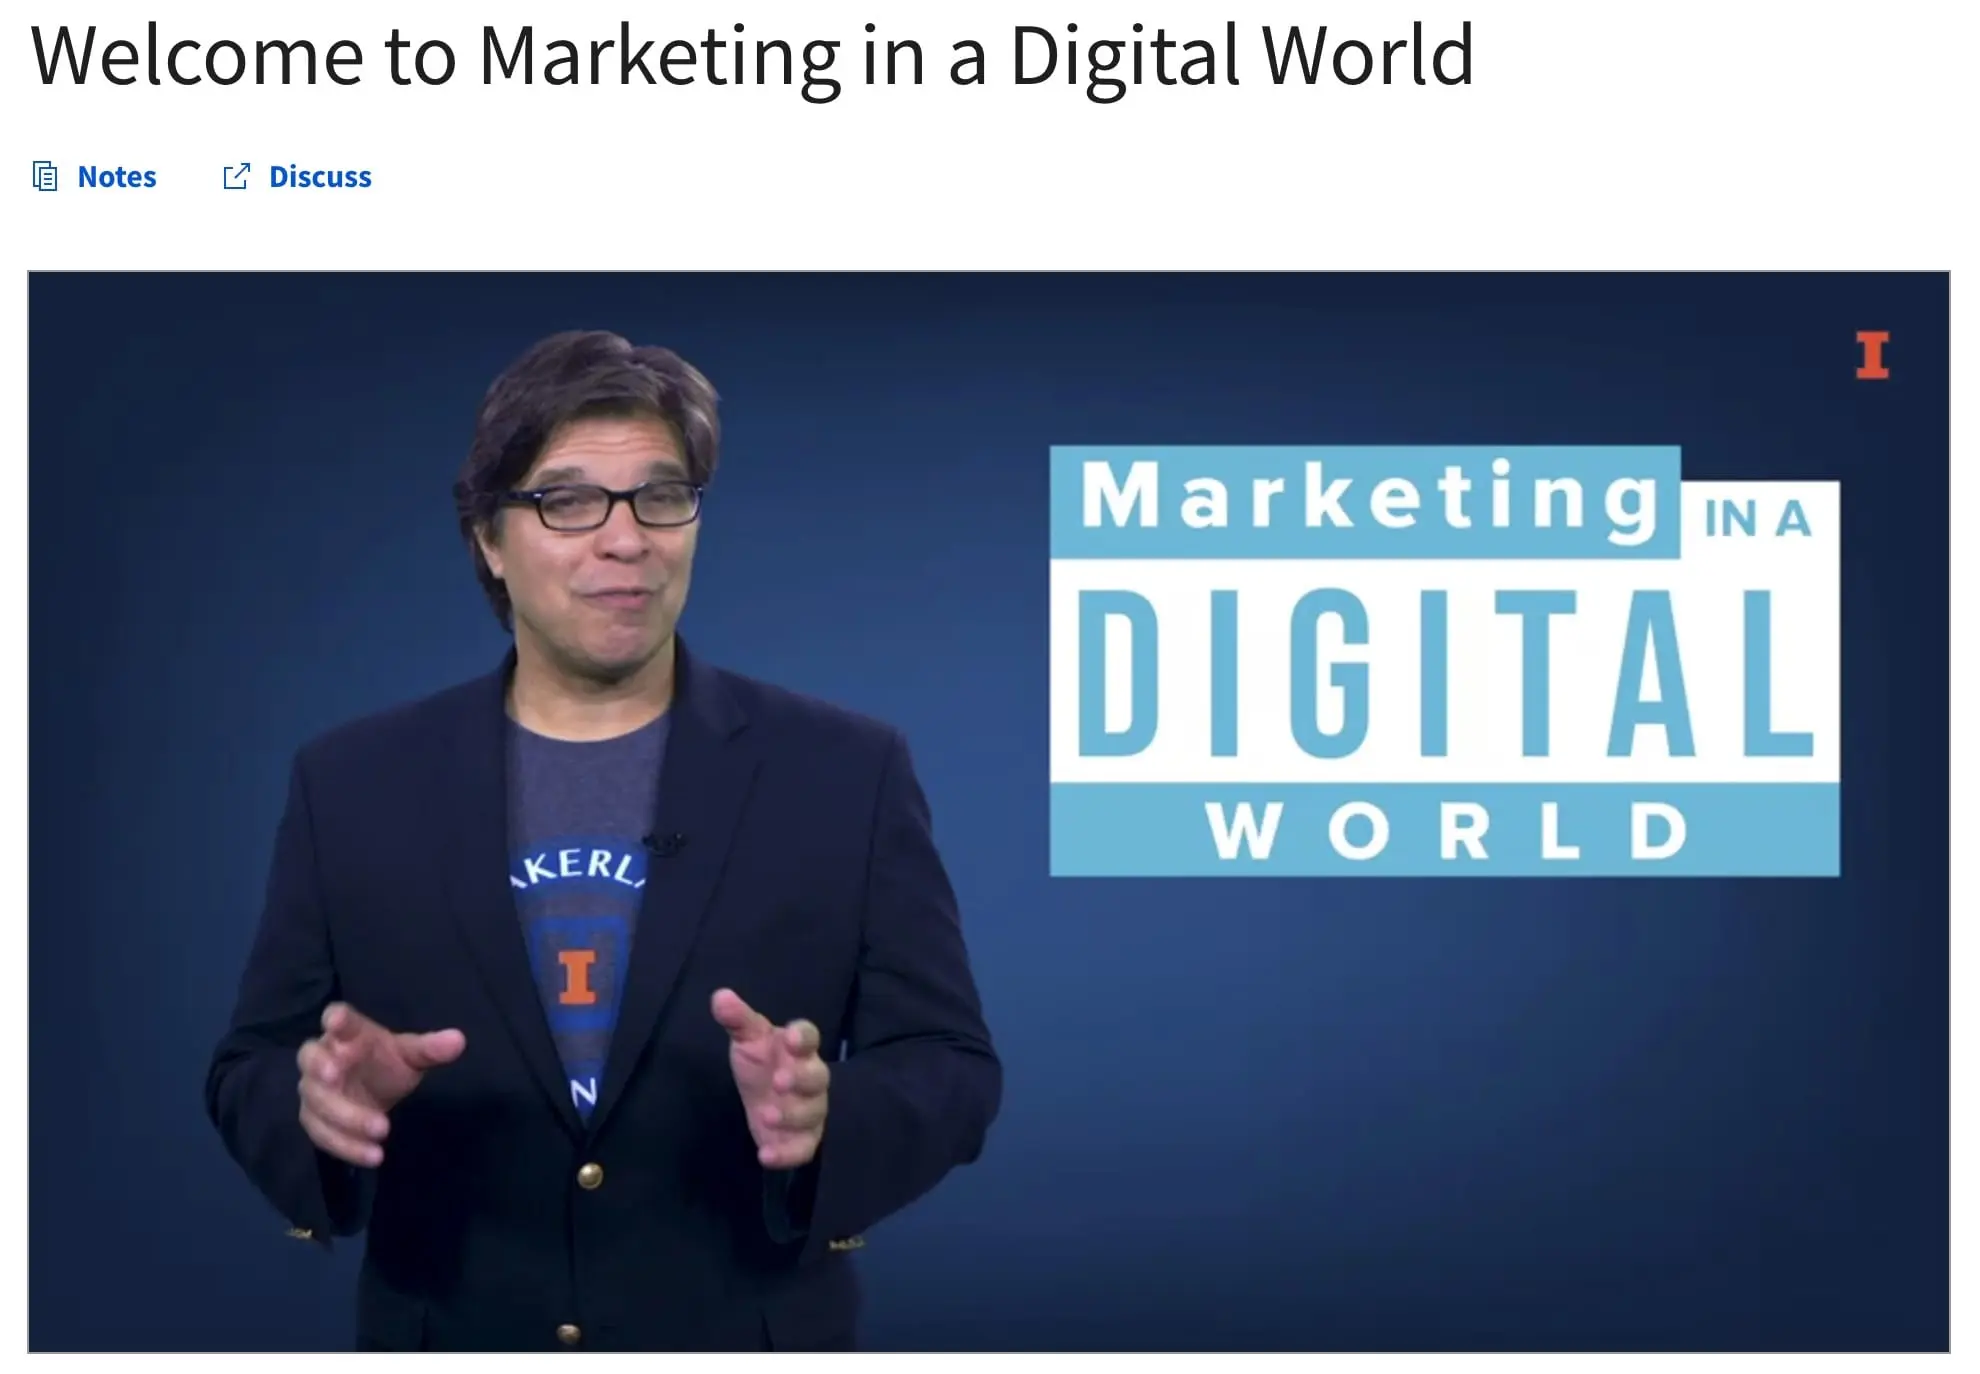 Marketing in a Digital World Course